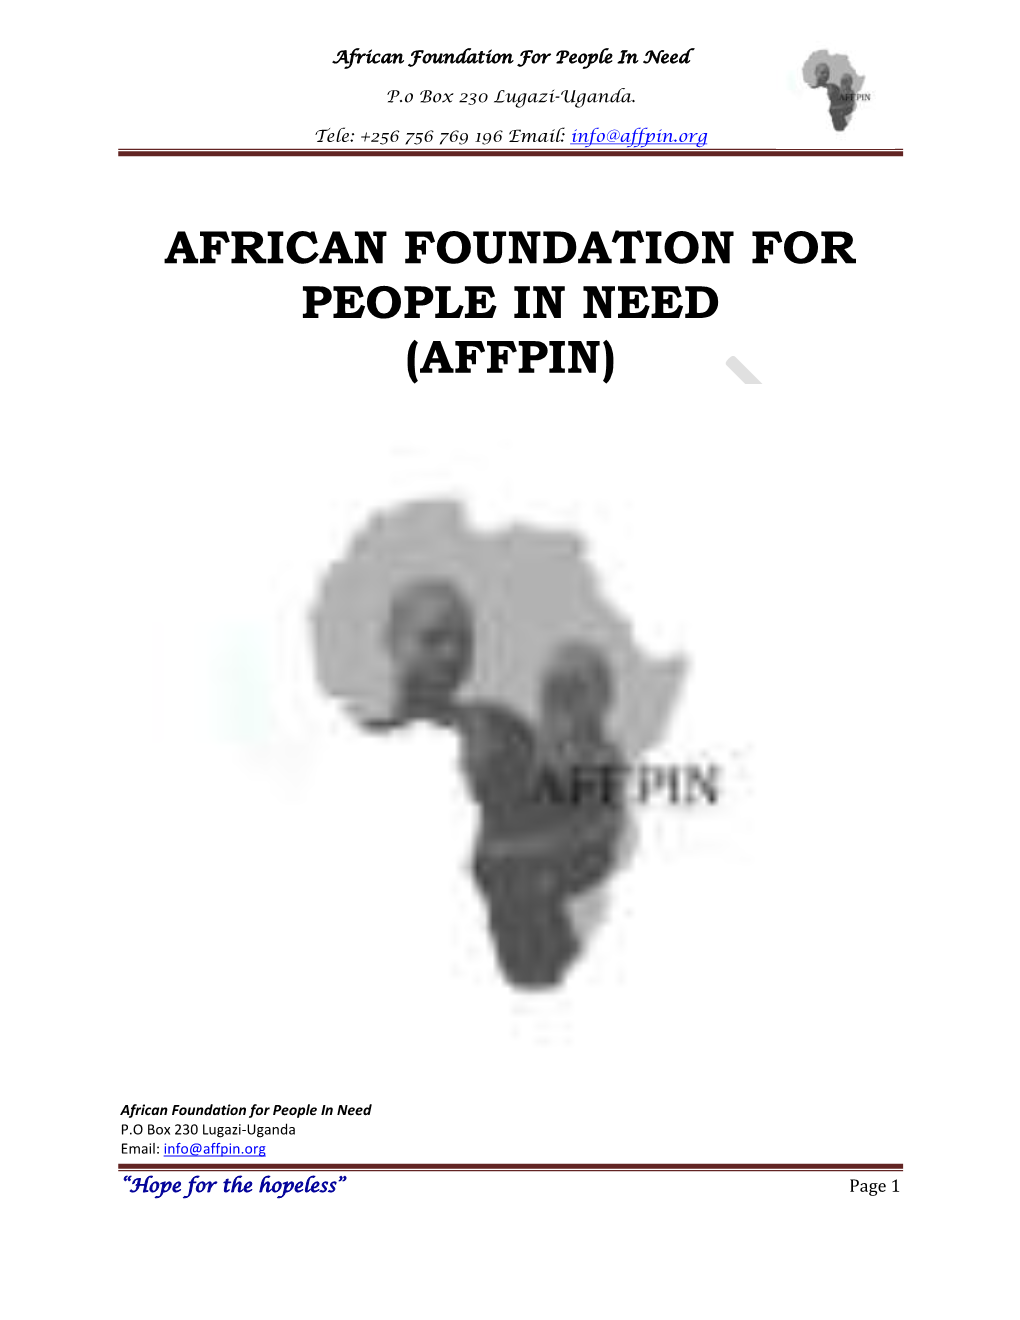 African Foundation for People in Need Po Box 230 Lugazi-Uganda. Tele